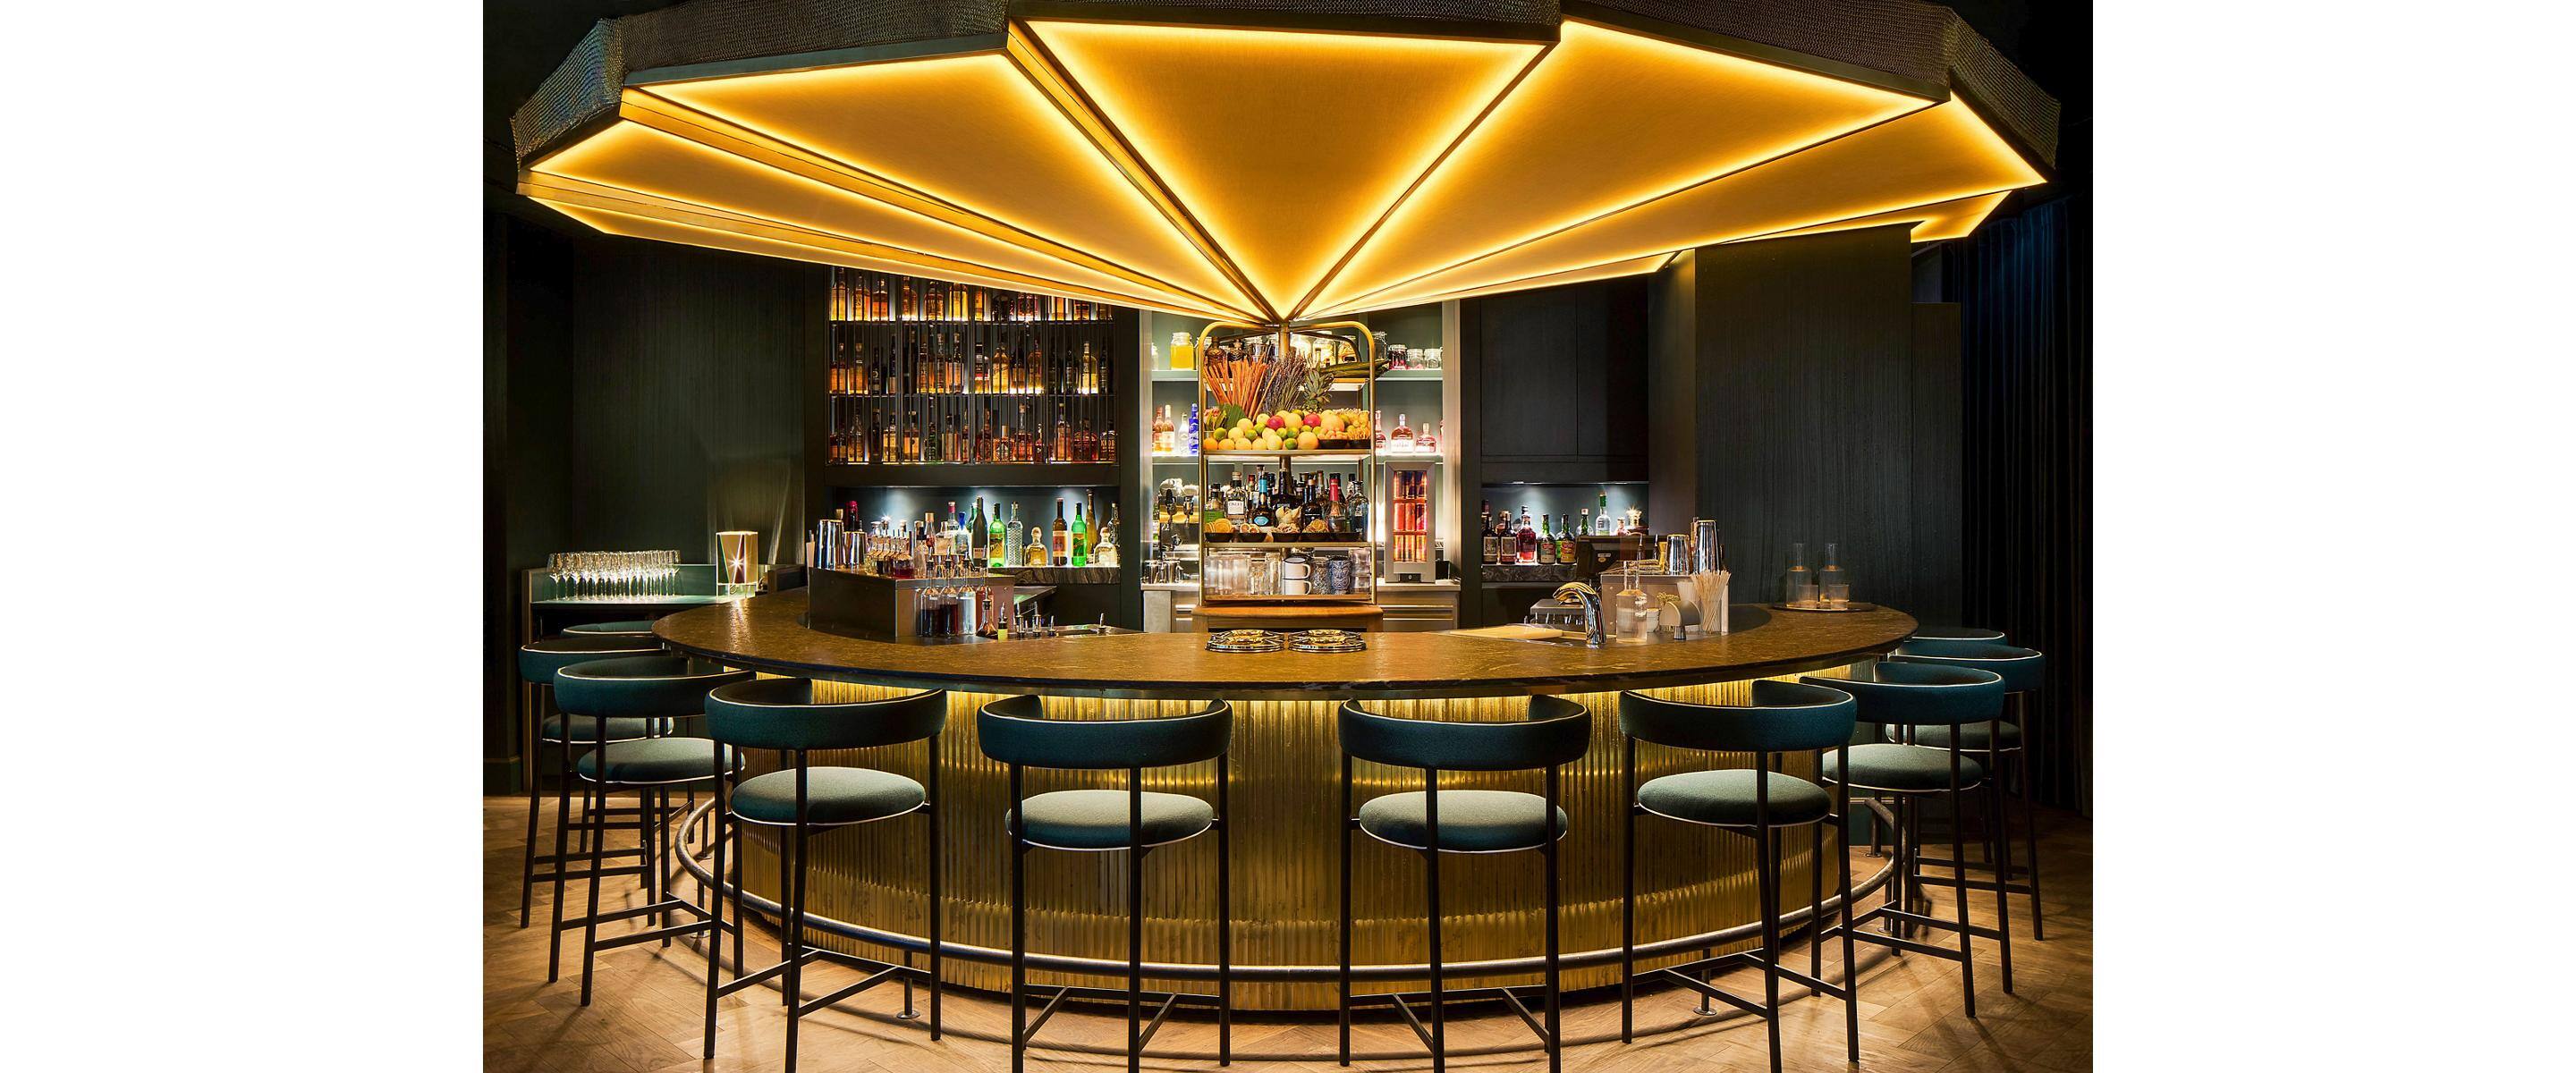 Six Of The Best Bars In Munich Luxury Travel Mo Magazine 